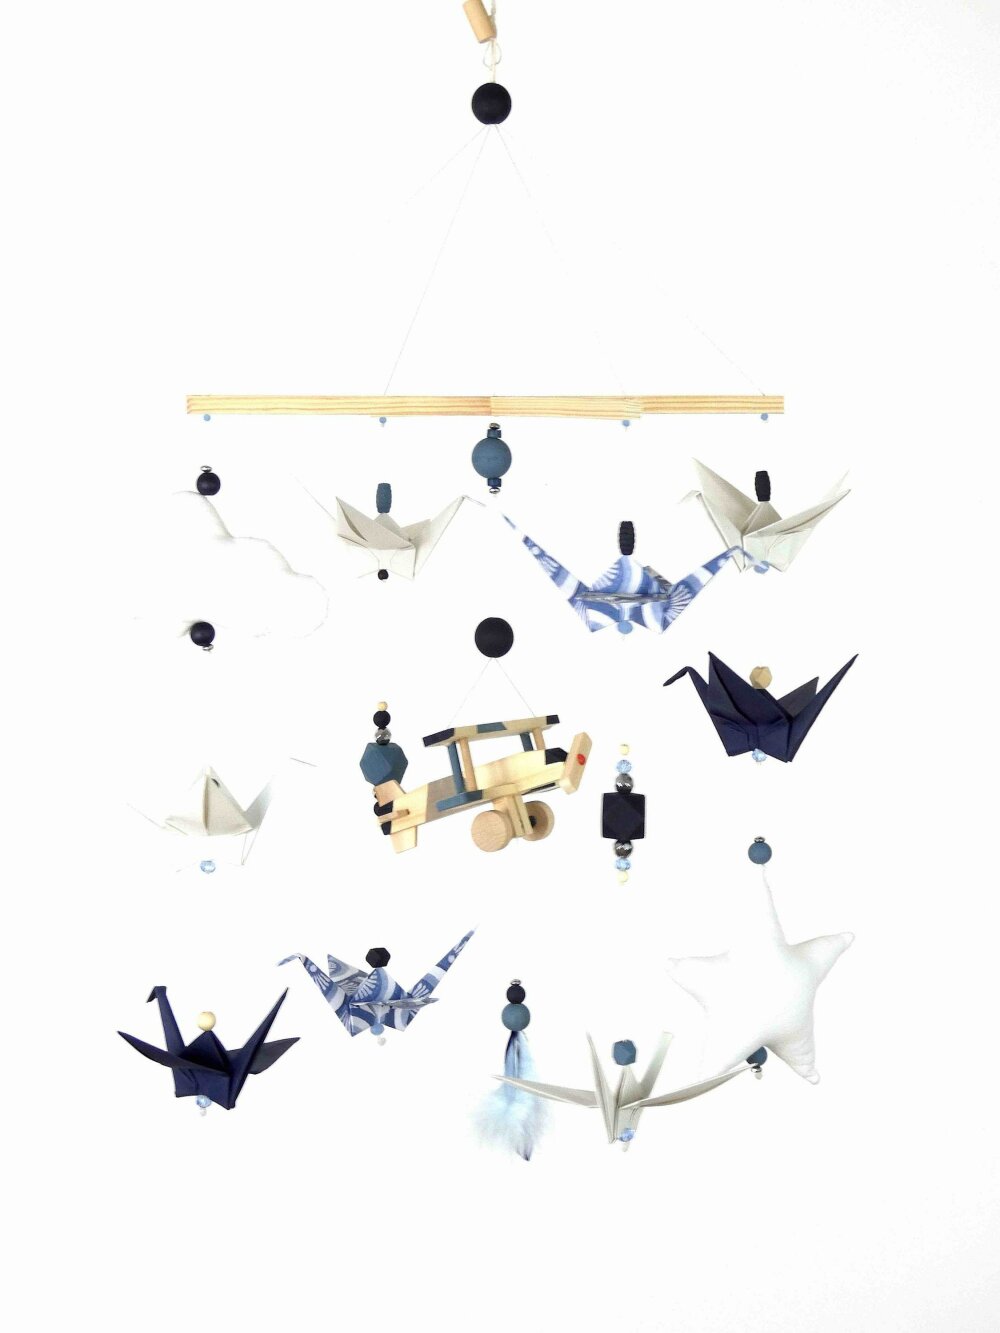 Mobile bébé origami bois avion bleu ciel bleu gris - CréaMaga